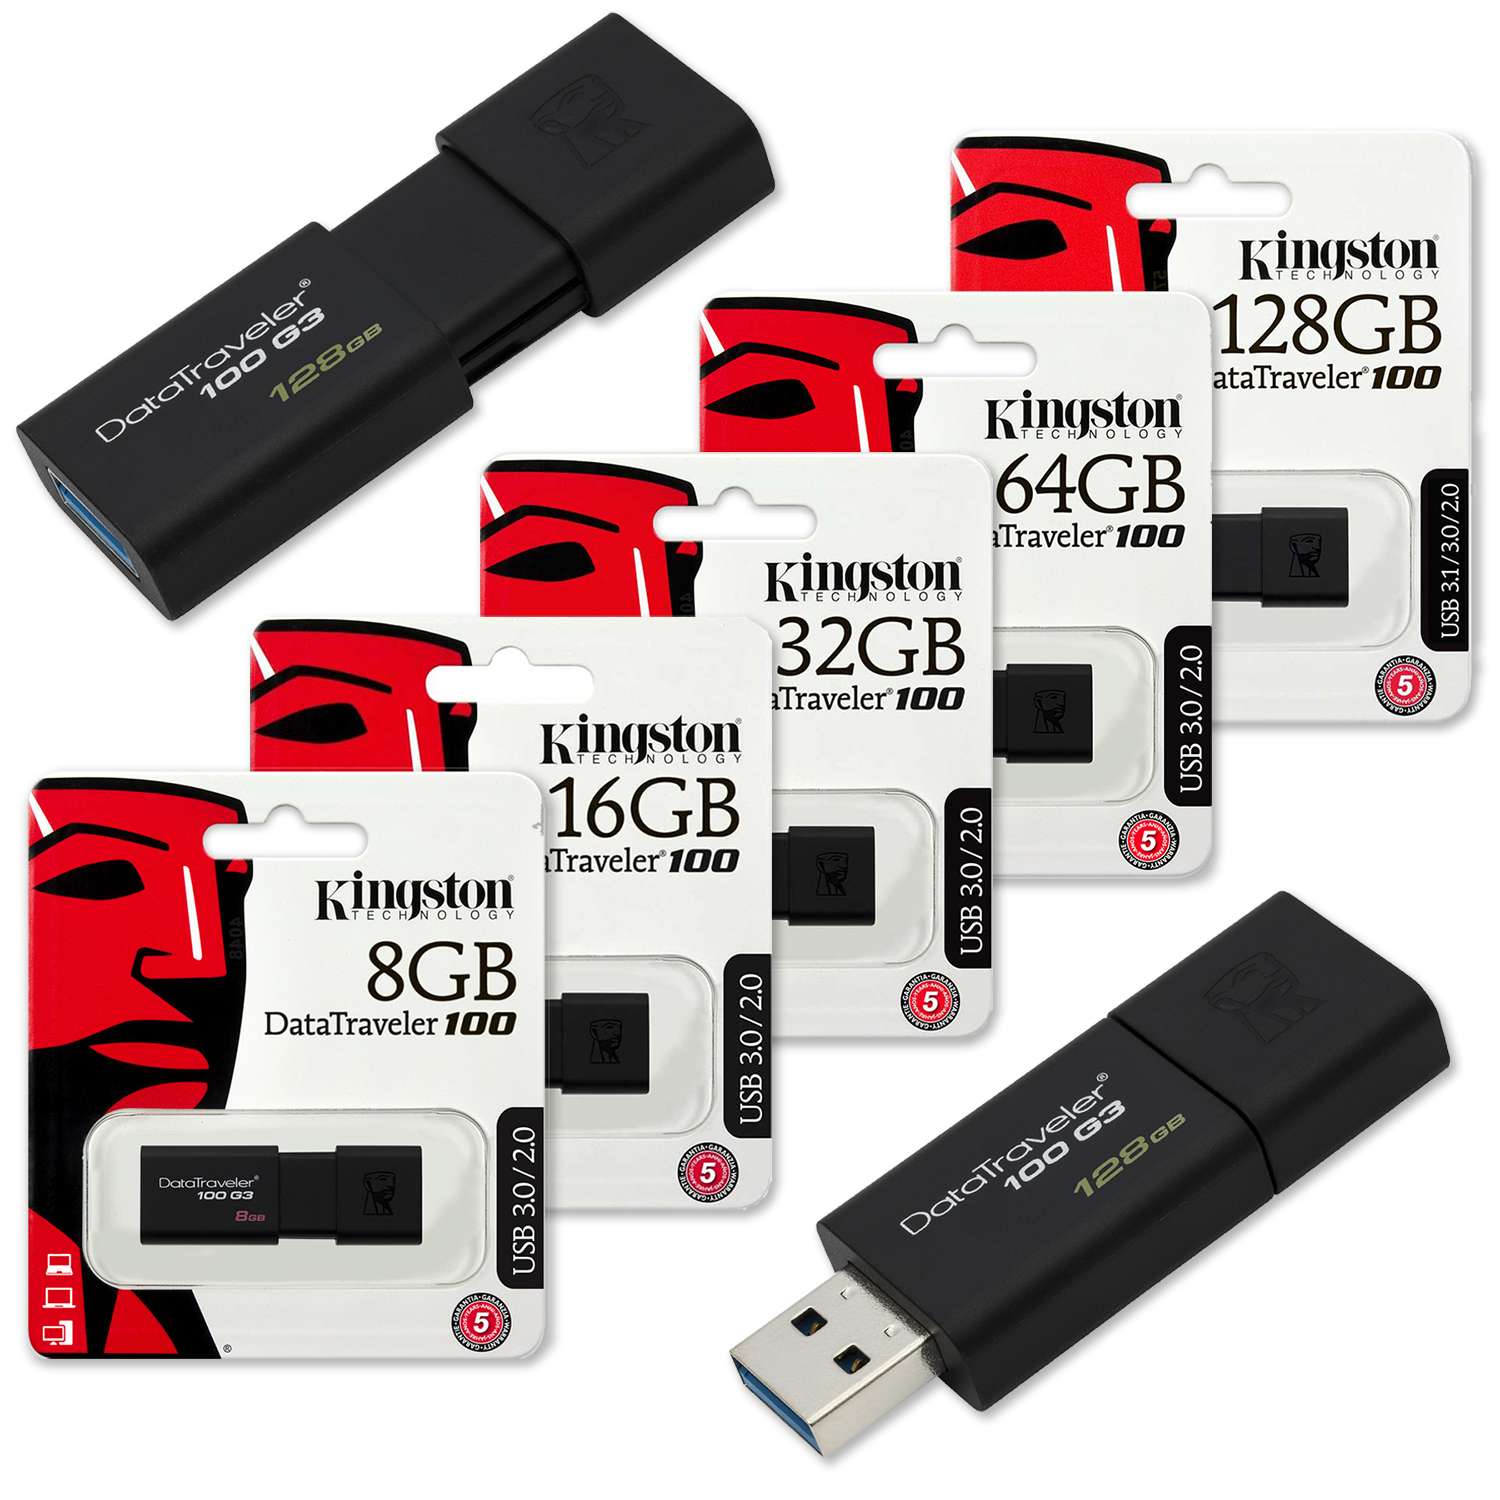 Флешка 128 гб кингстон. Kingston DATATRAVELER 100 g3 64gb. USB 3.0 64gb Kingston data traveler dt100-g3. 64 ГБ Kingston DATATRAVELER 3.0. Kingston USB Drive 64gb dt100g3/64gb (USB3.0).